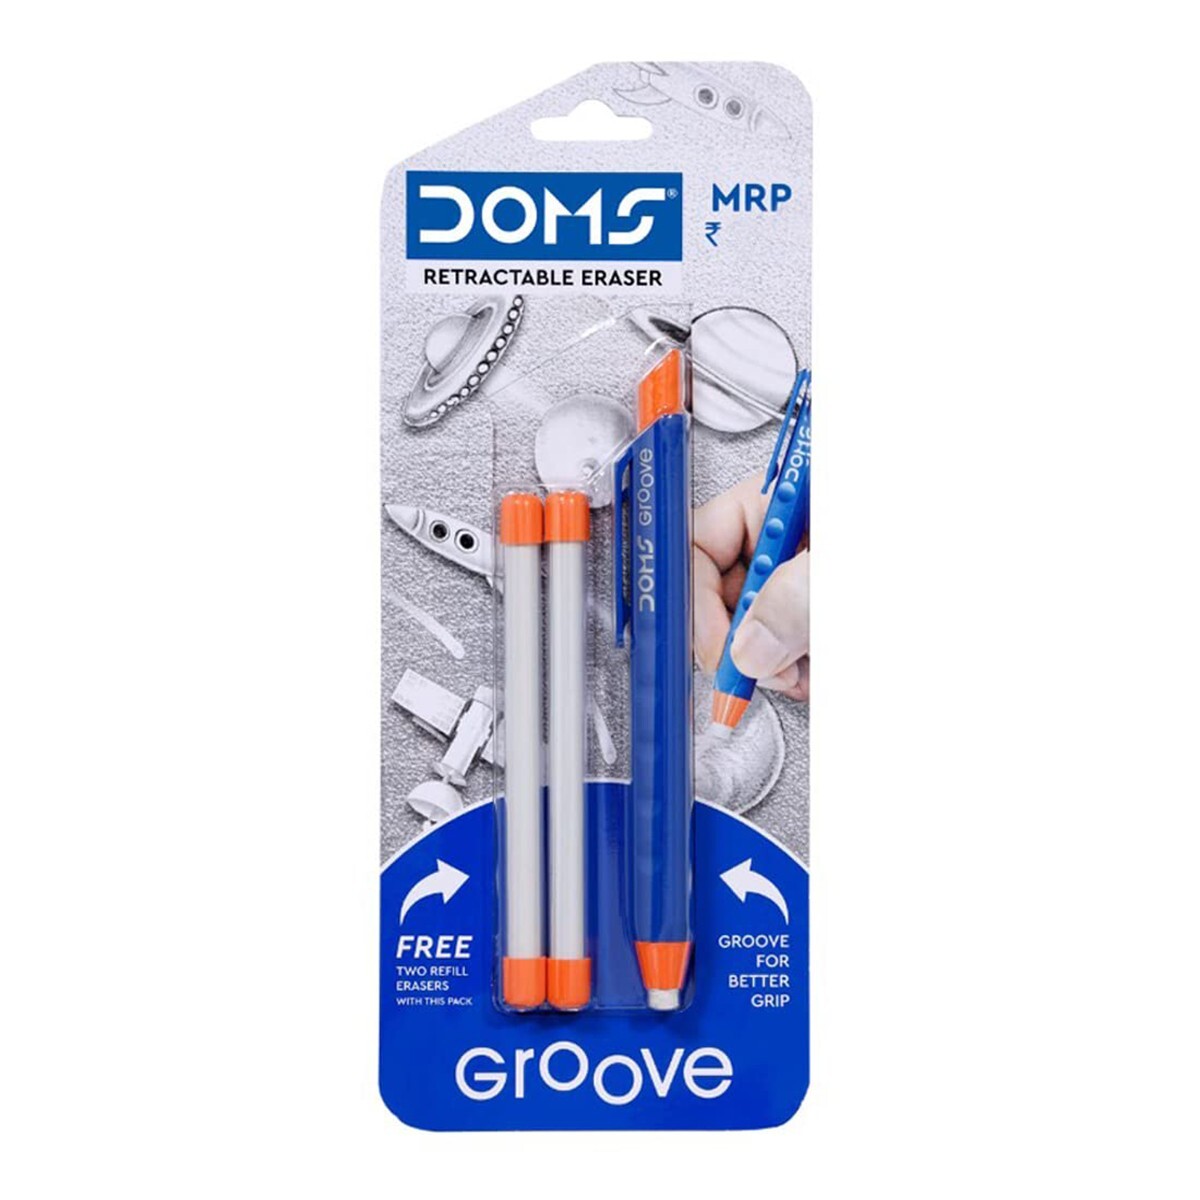 Doms Groove Retractable Eraser 8356